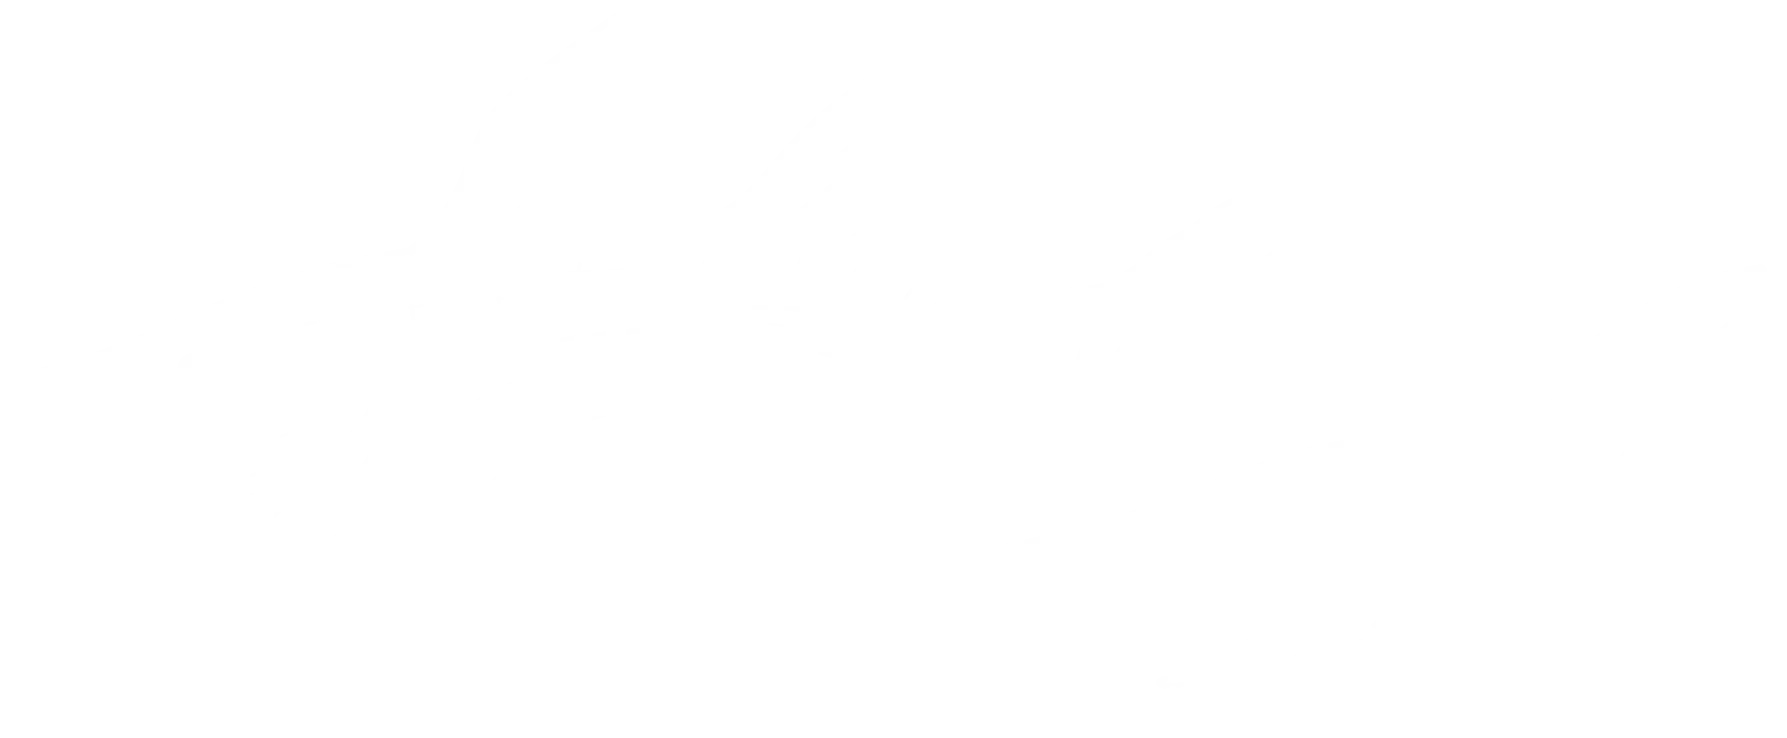 Snook Fish